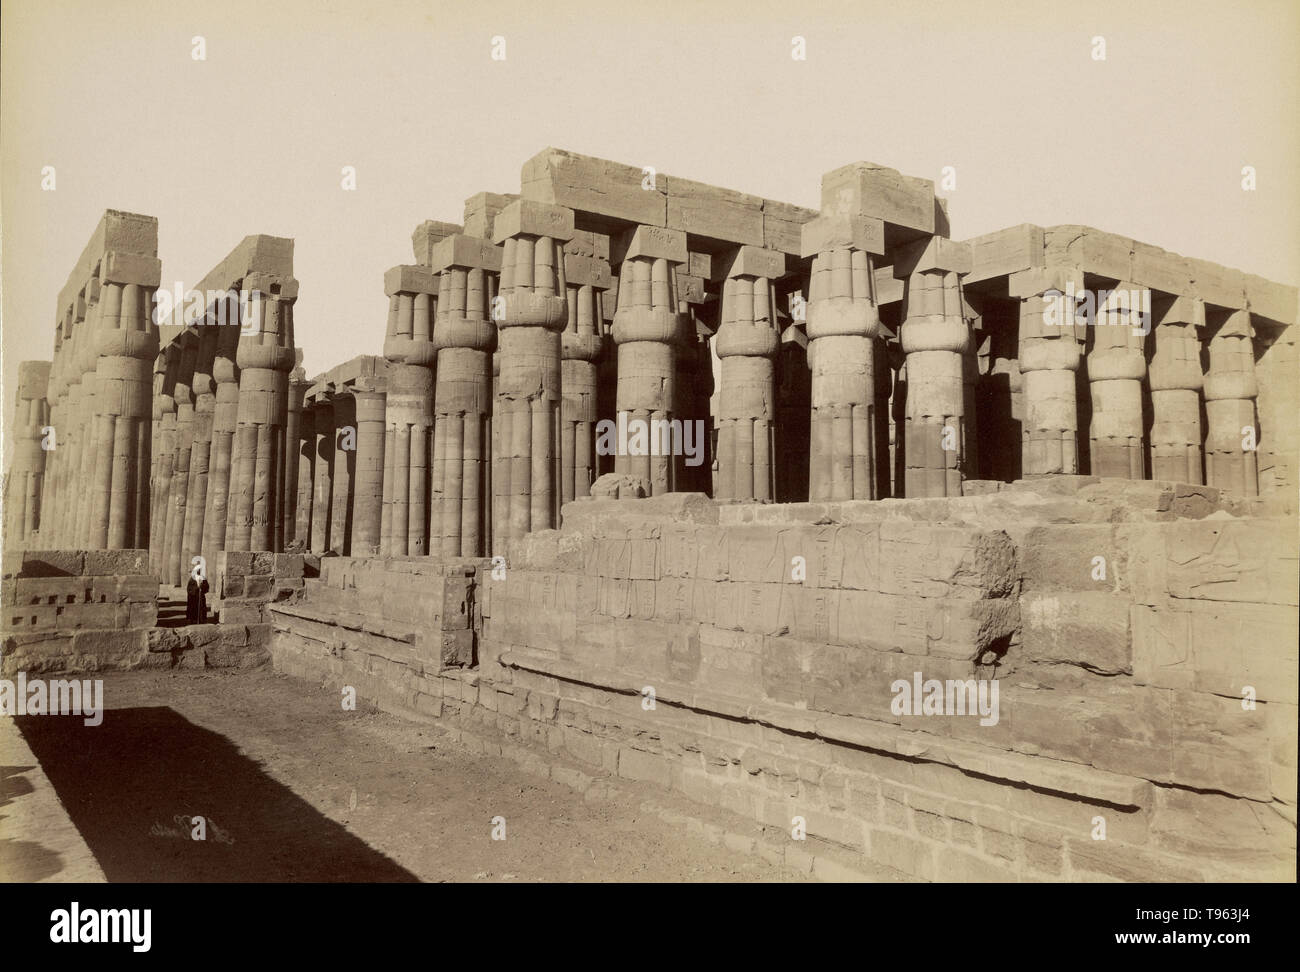 View of the Temple at Luxor, 1880s. Antonio Beato (English, born Italy, about 1835 - 1906). Albumen silver print. Stock Photo